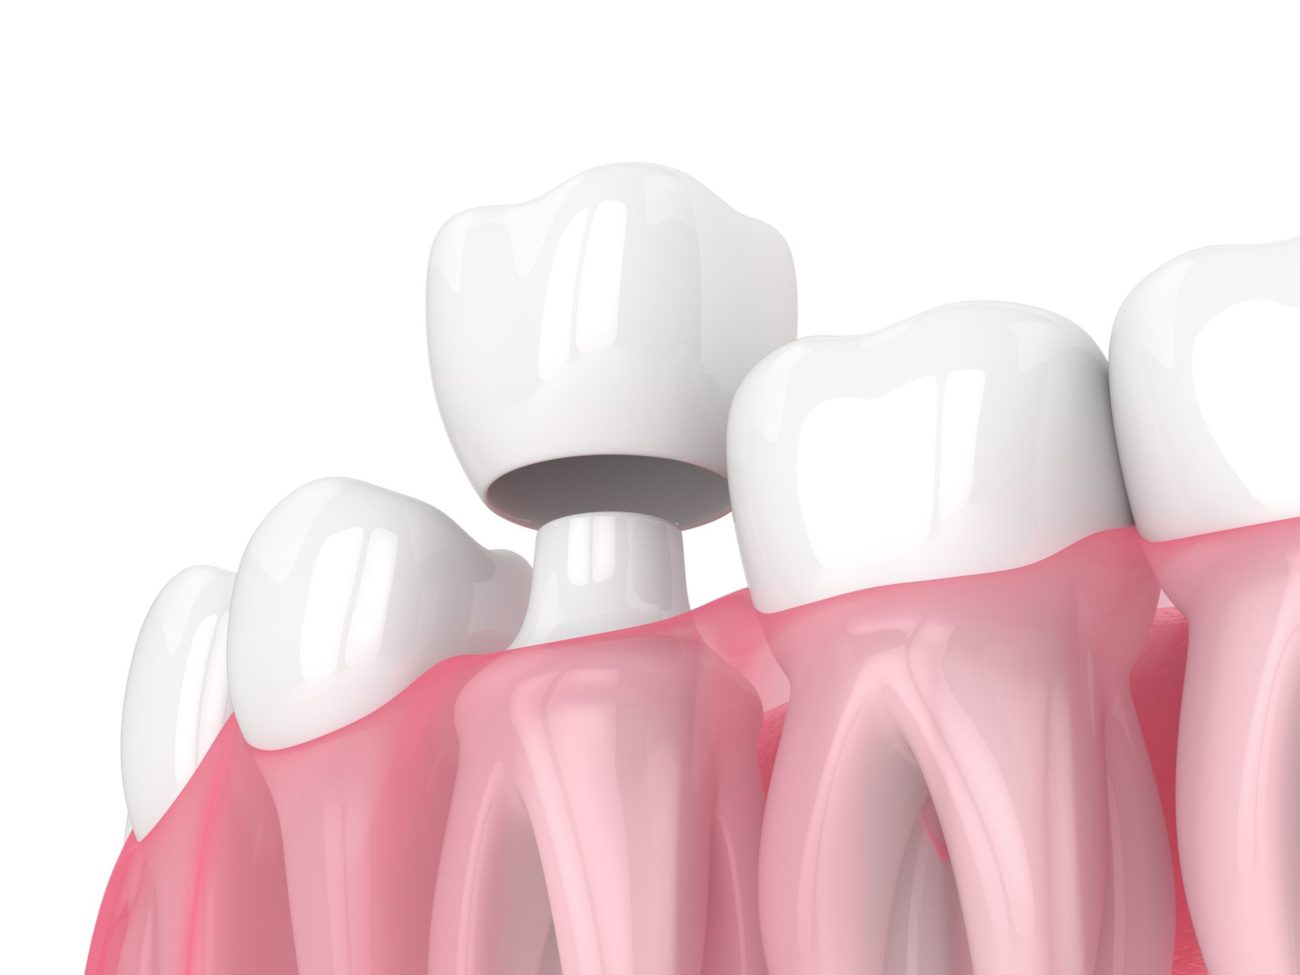 Dental crowns treatment